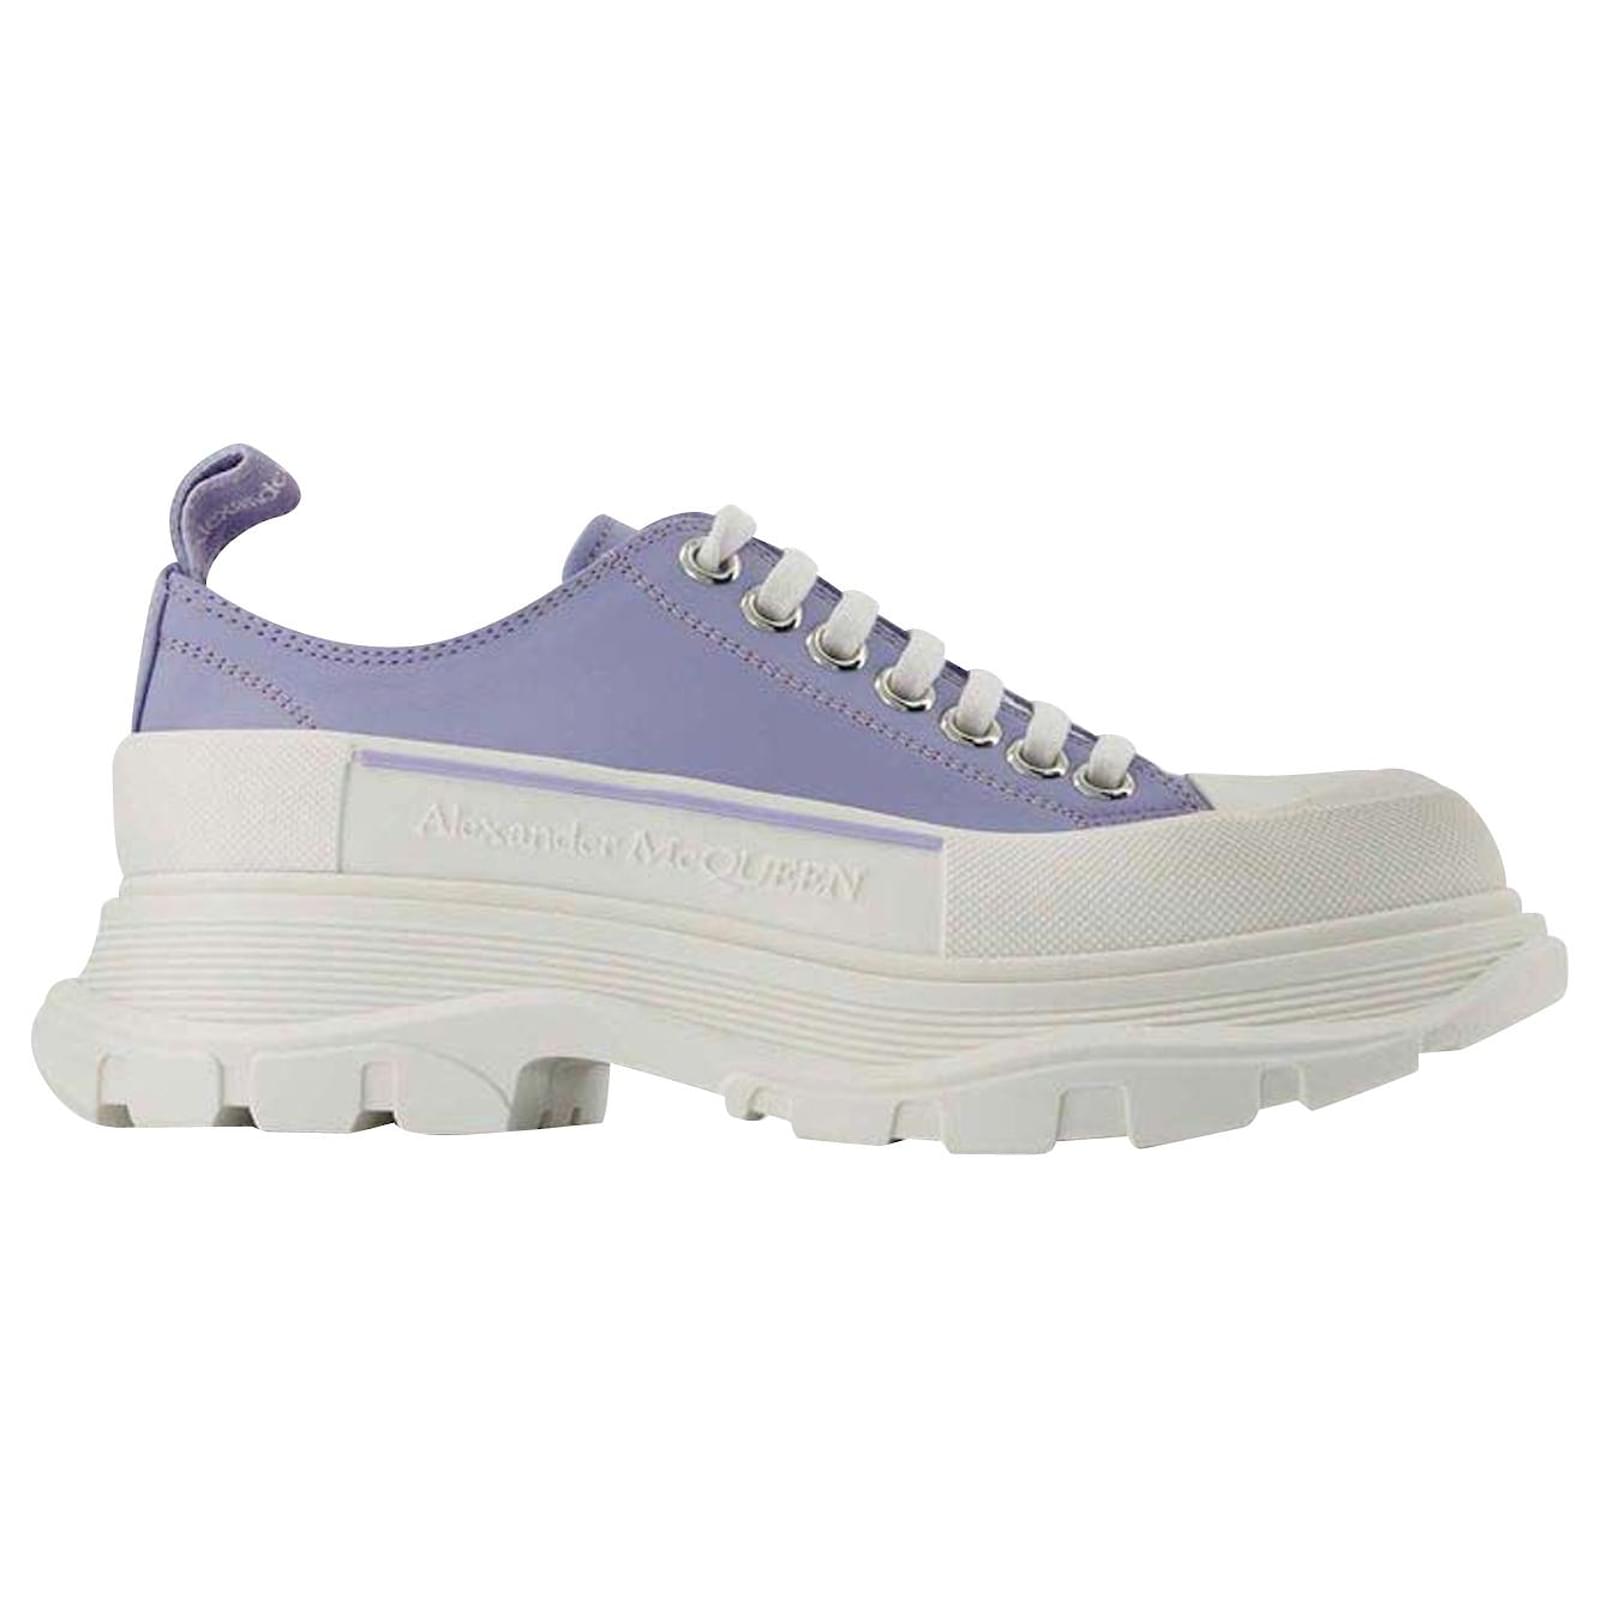 Tread Slick Sneakers - Alexander Mcqueen - Lilac/White - Leather Multiple colors ref.743269 - Joli